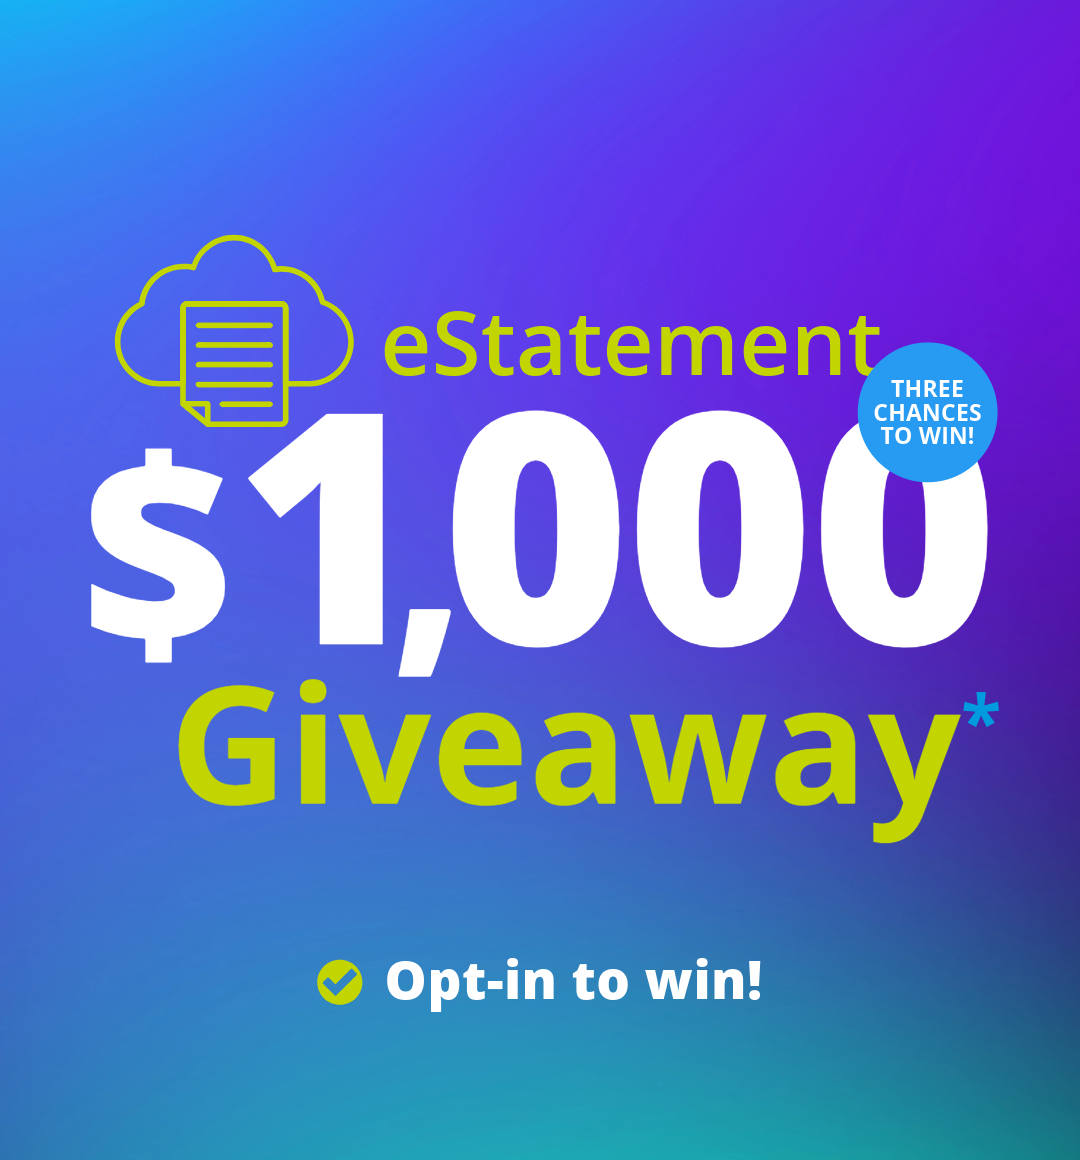 eStatement $1000 Giveaway